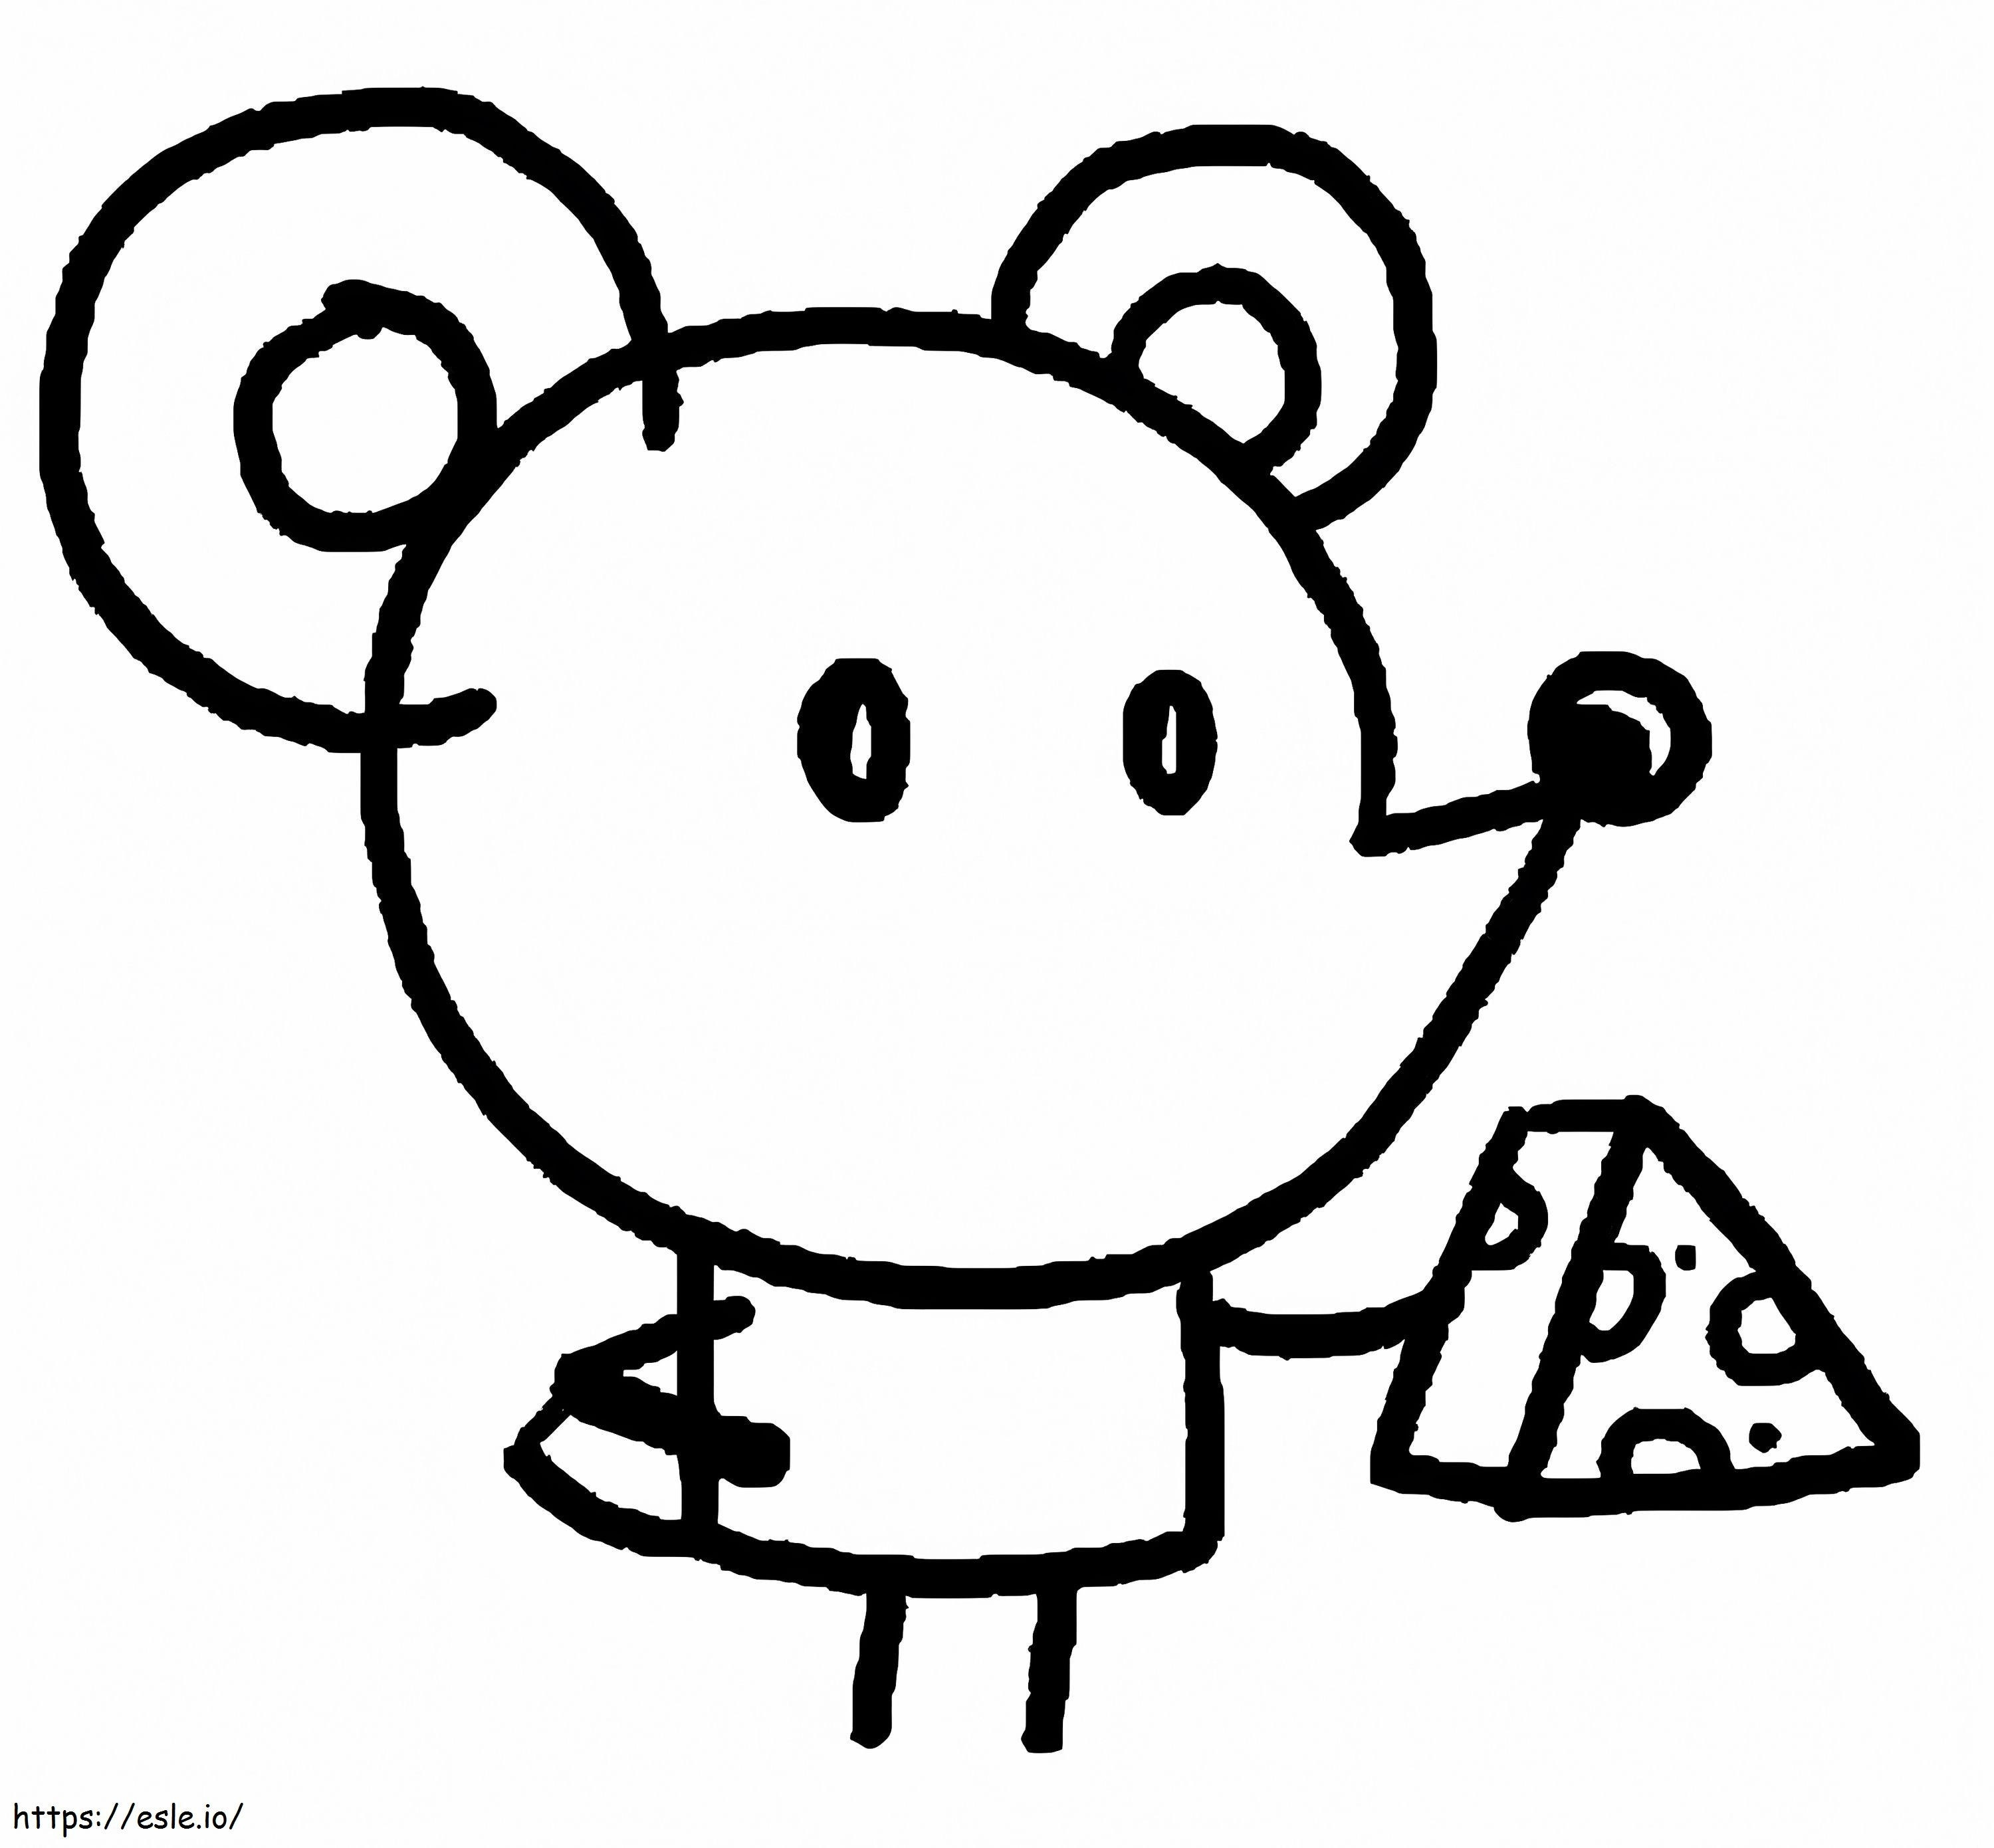 Ratinho Minúsculo de Chico Bon Bon para colorir